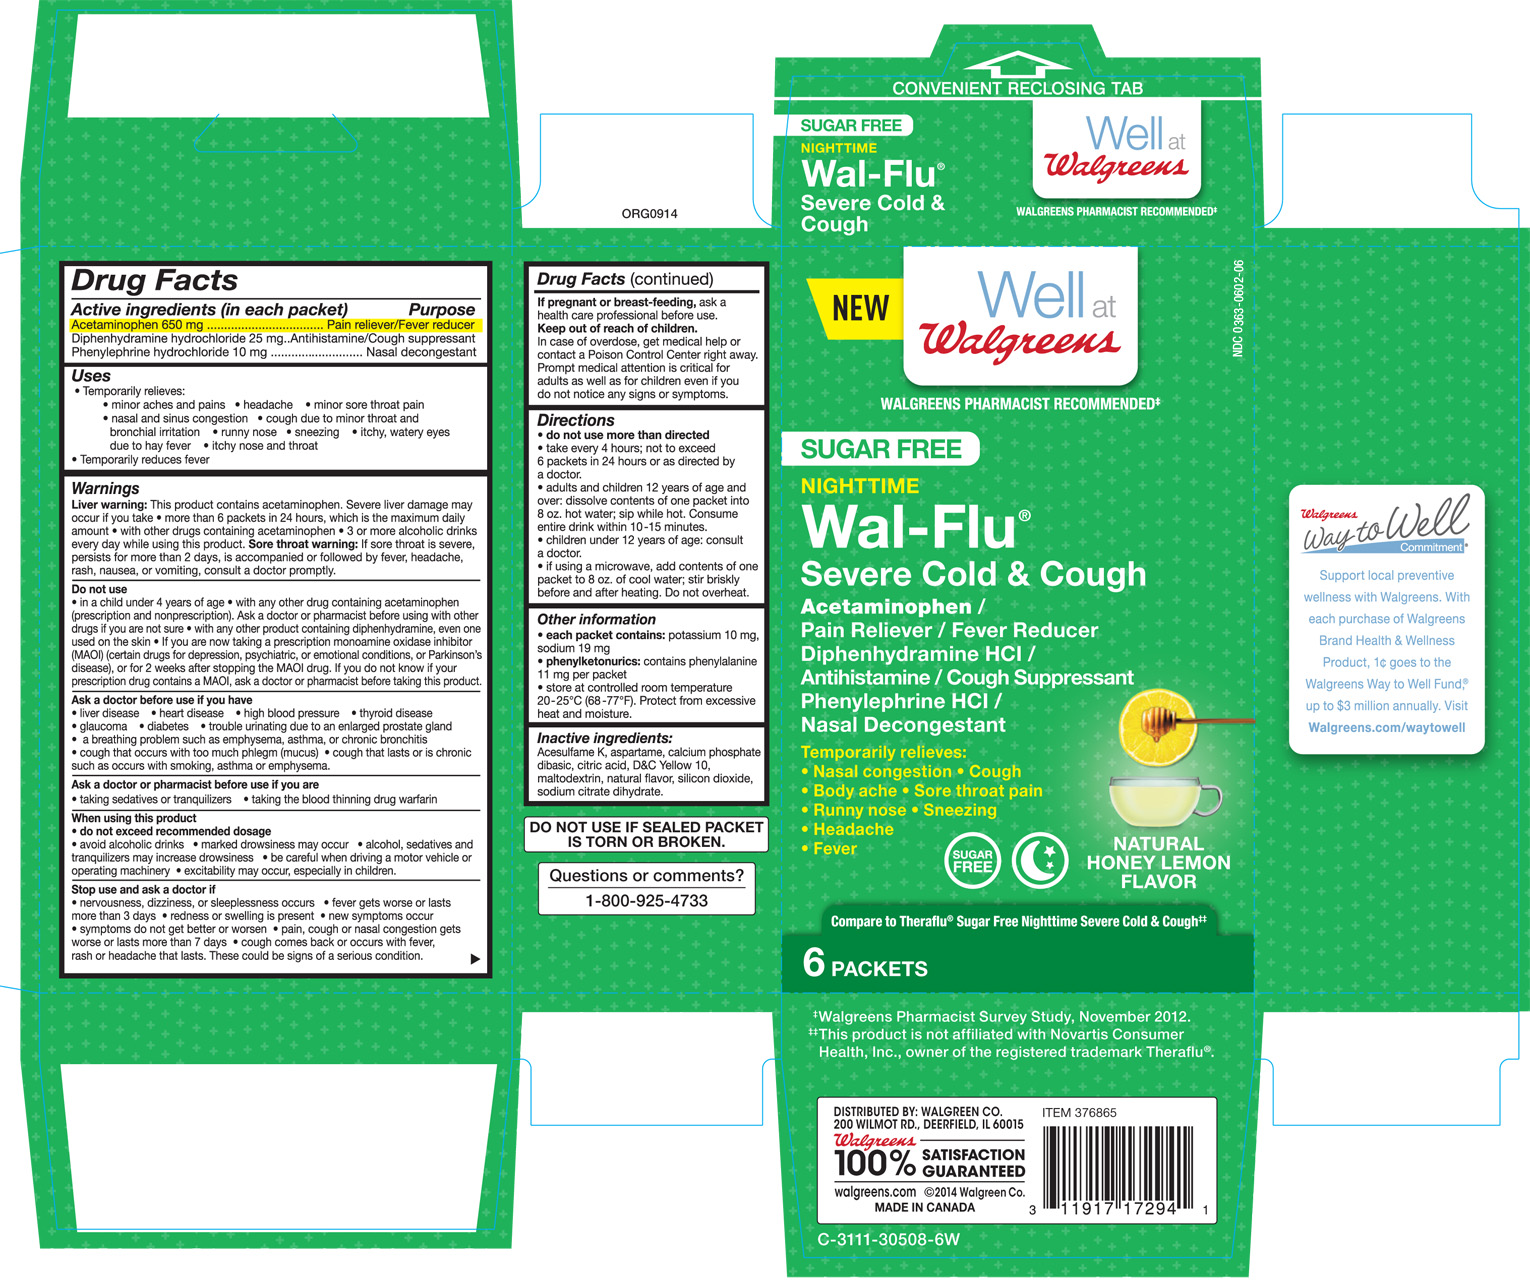 Walgreens Sugar Free Nighttime Wal-flu Severe Cold And Cough Natural Honey Lemon Flavor Breastfeeding